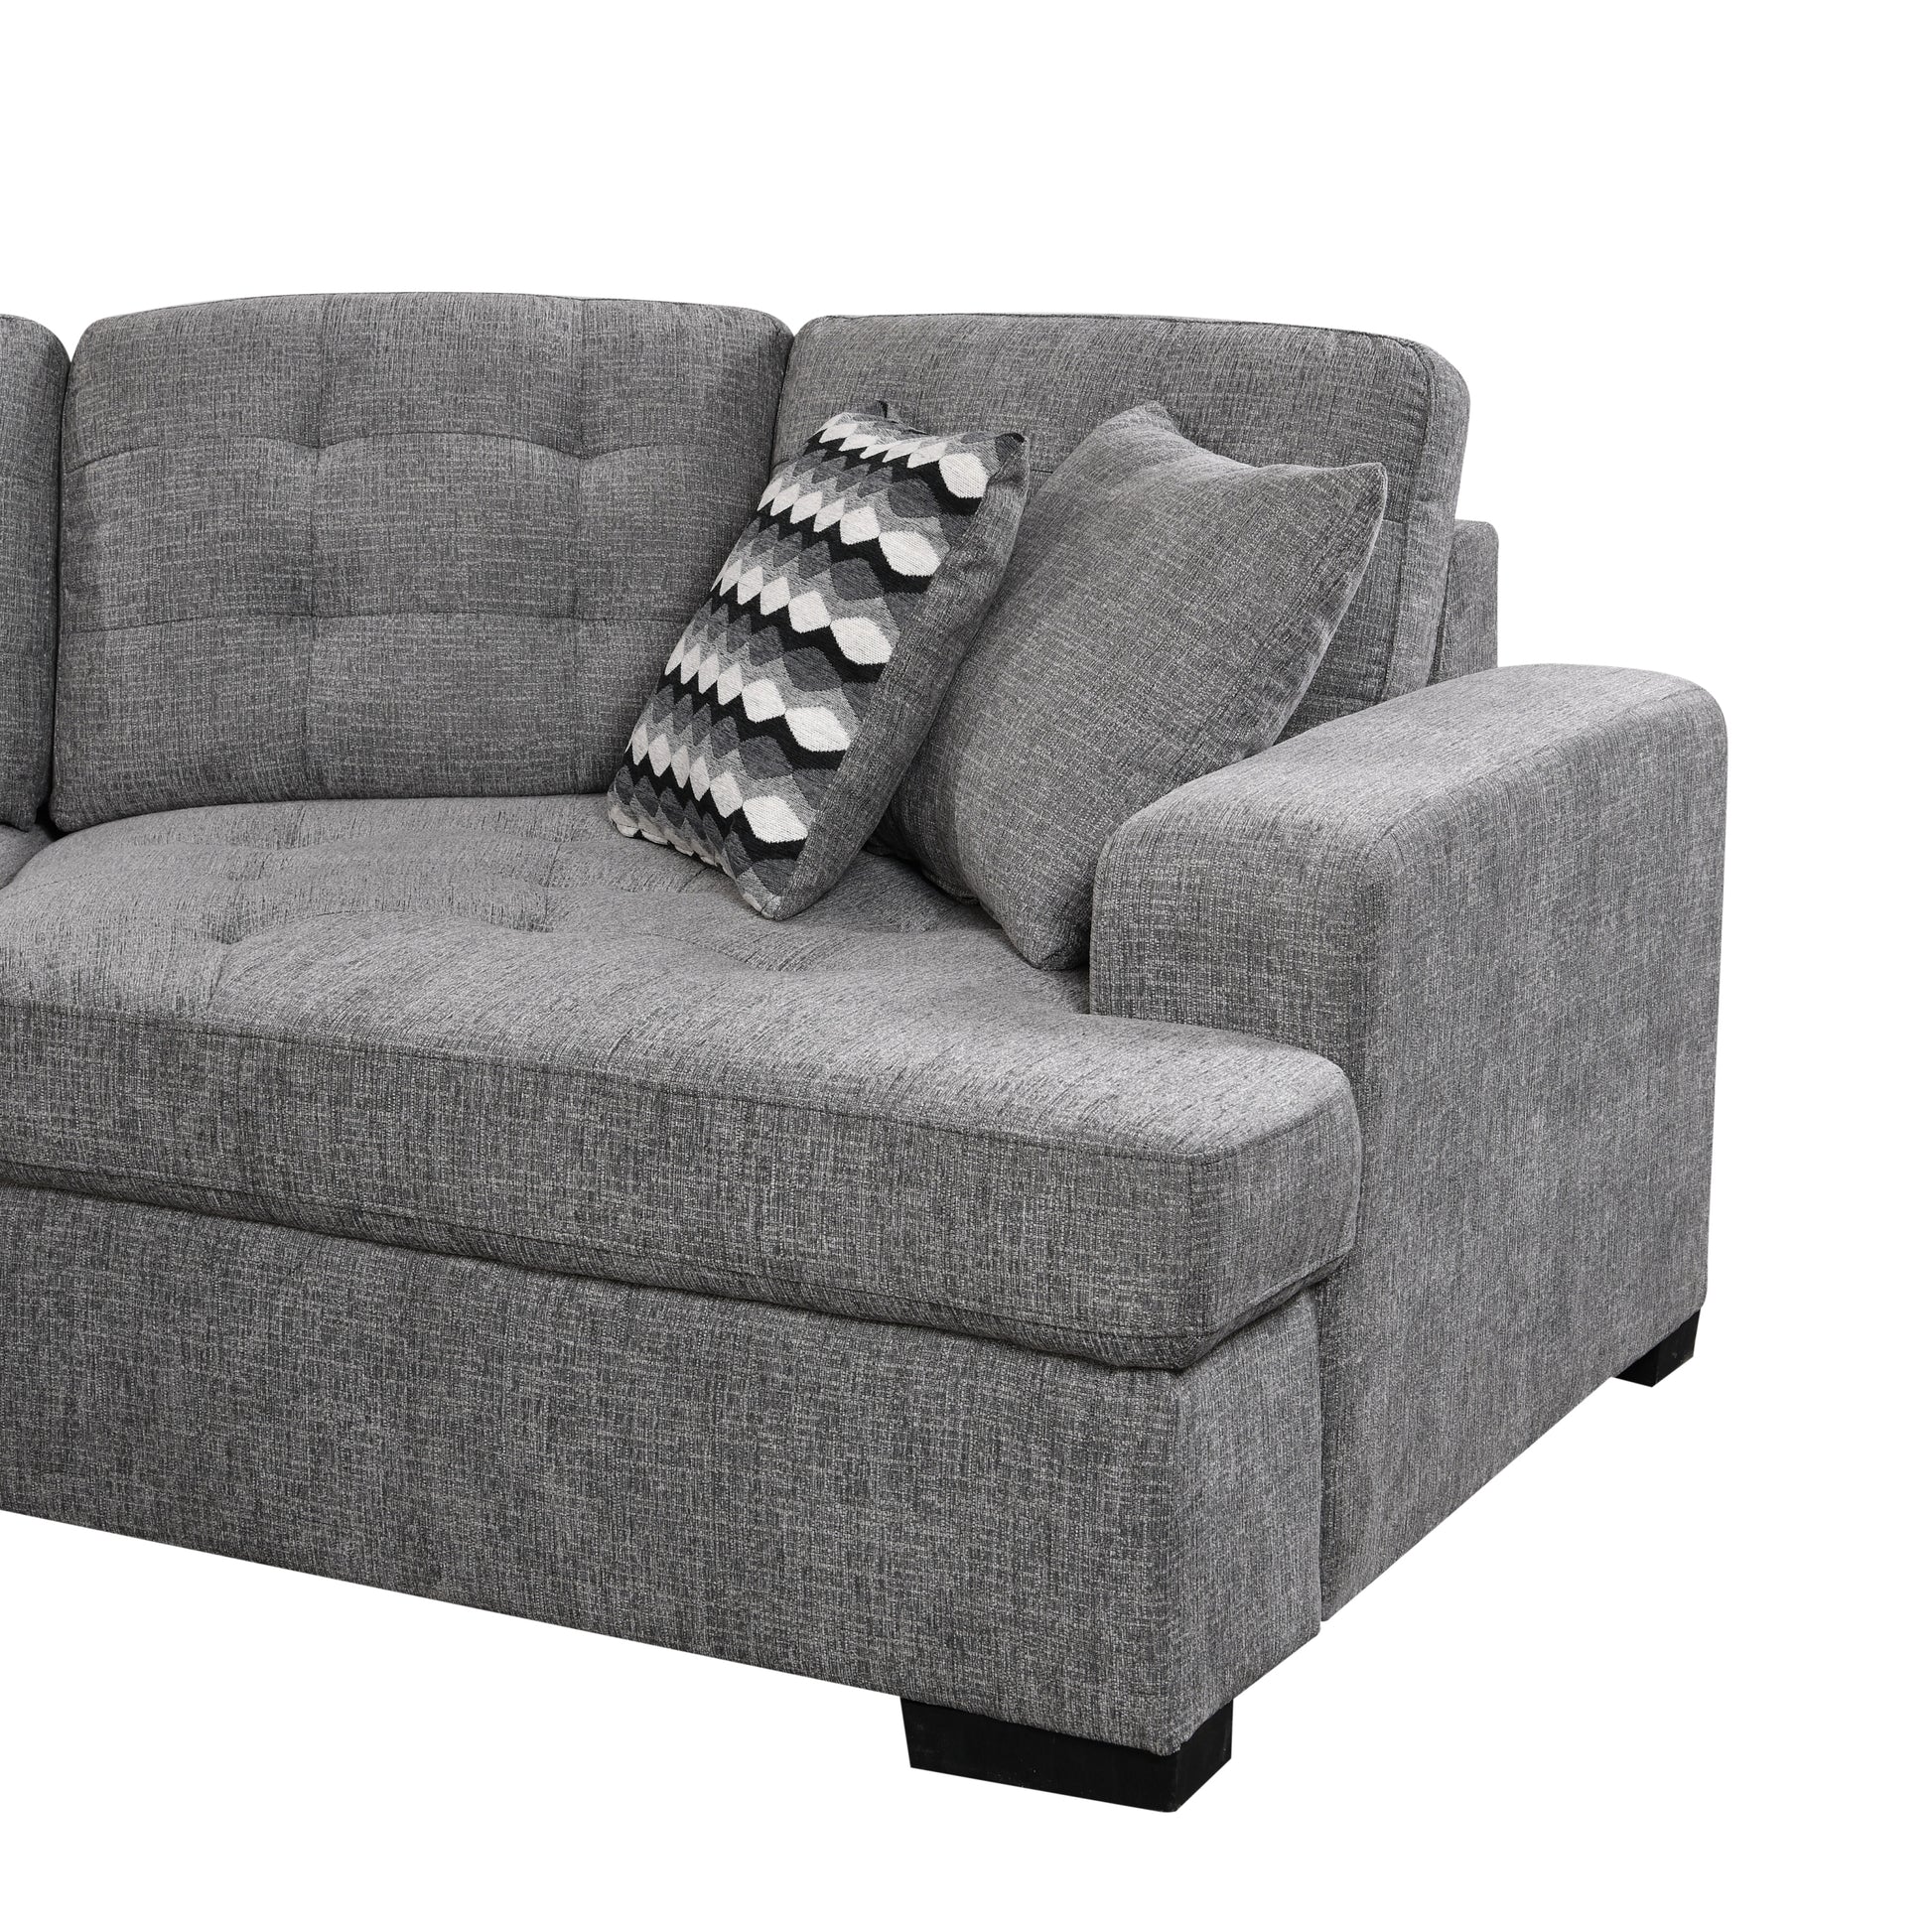 U-Shape Sectional Sofa, Oversized, Wide Chaise, Grey